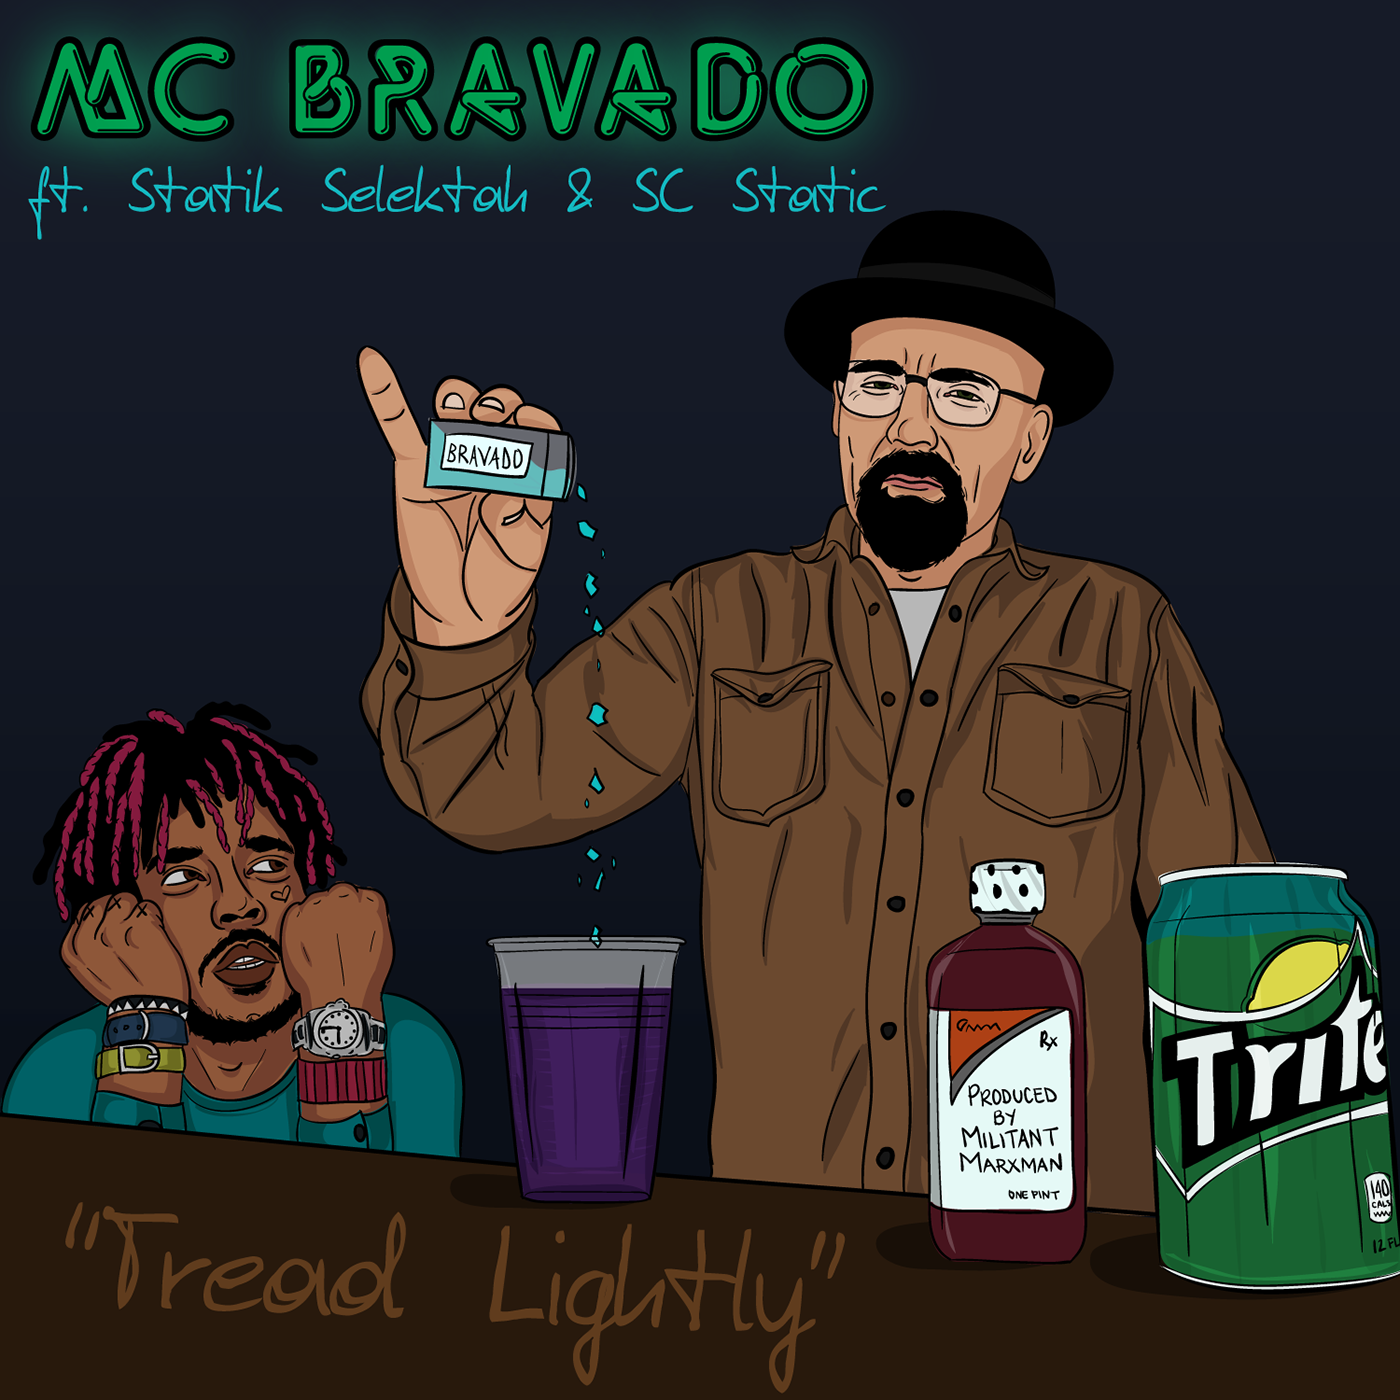 MC Bravado Statik Selektah SC Static hip hop rap underground hip hop song art vector breaking bad walter white